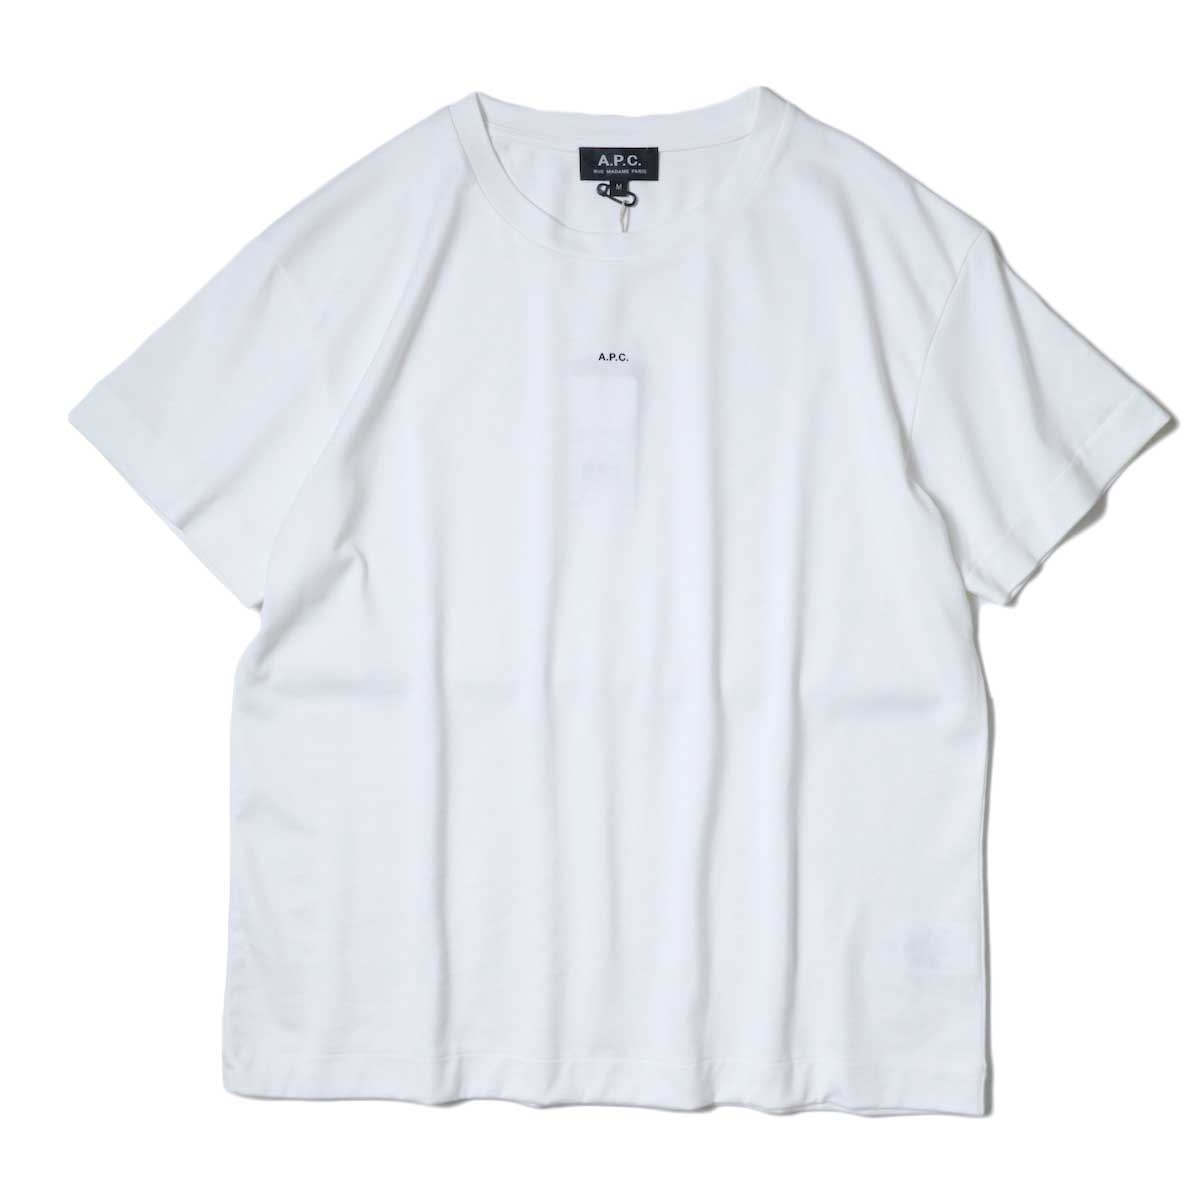 A.P.C. / Jade Tシャツ (White)